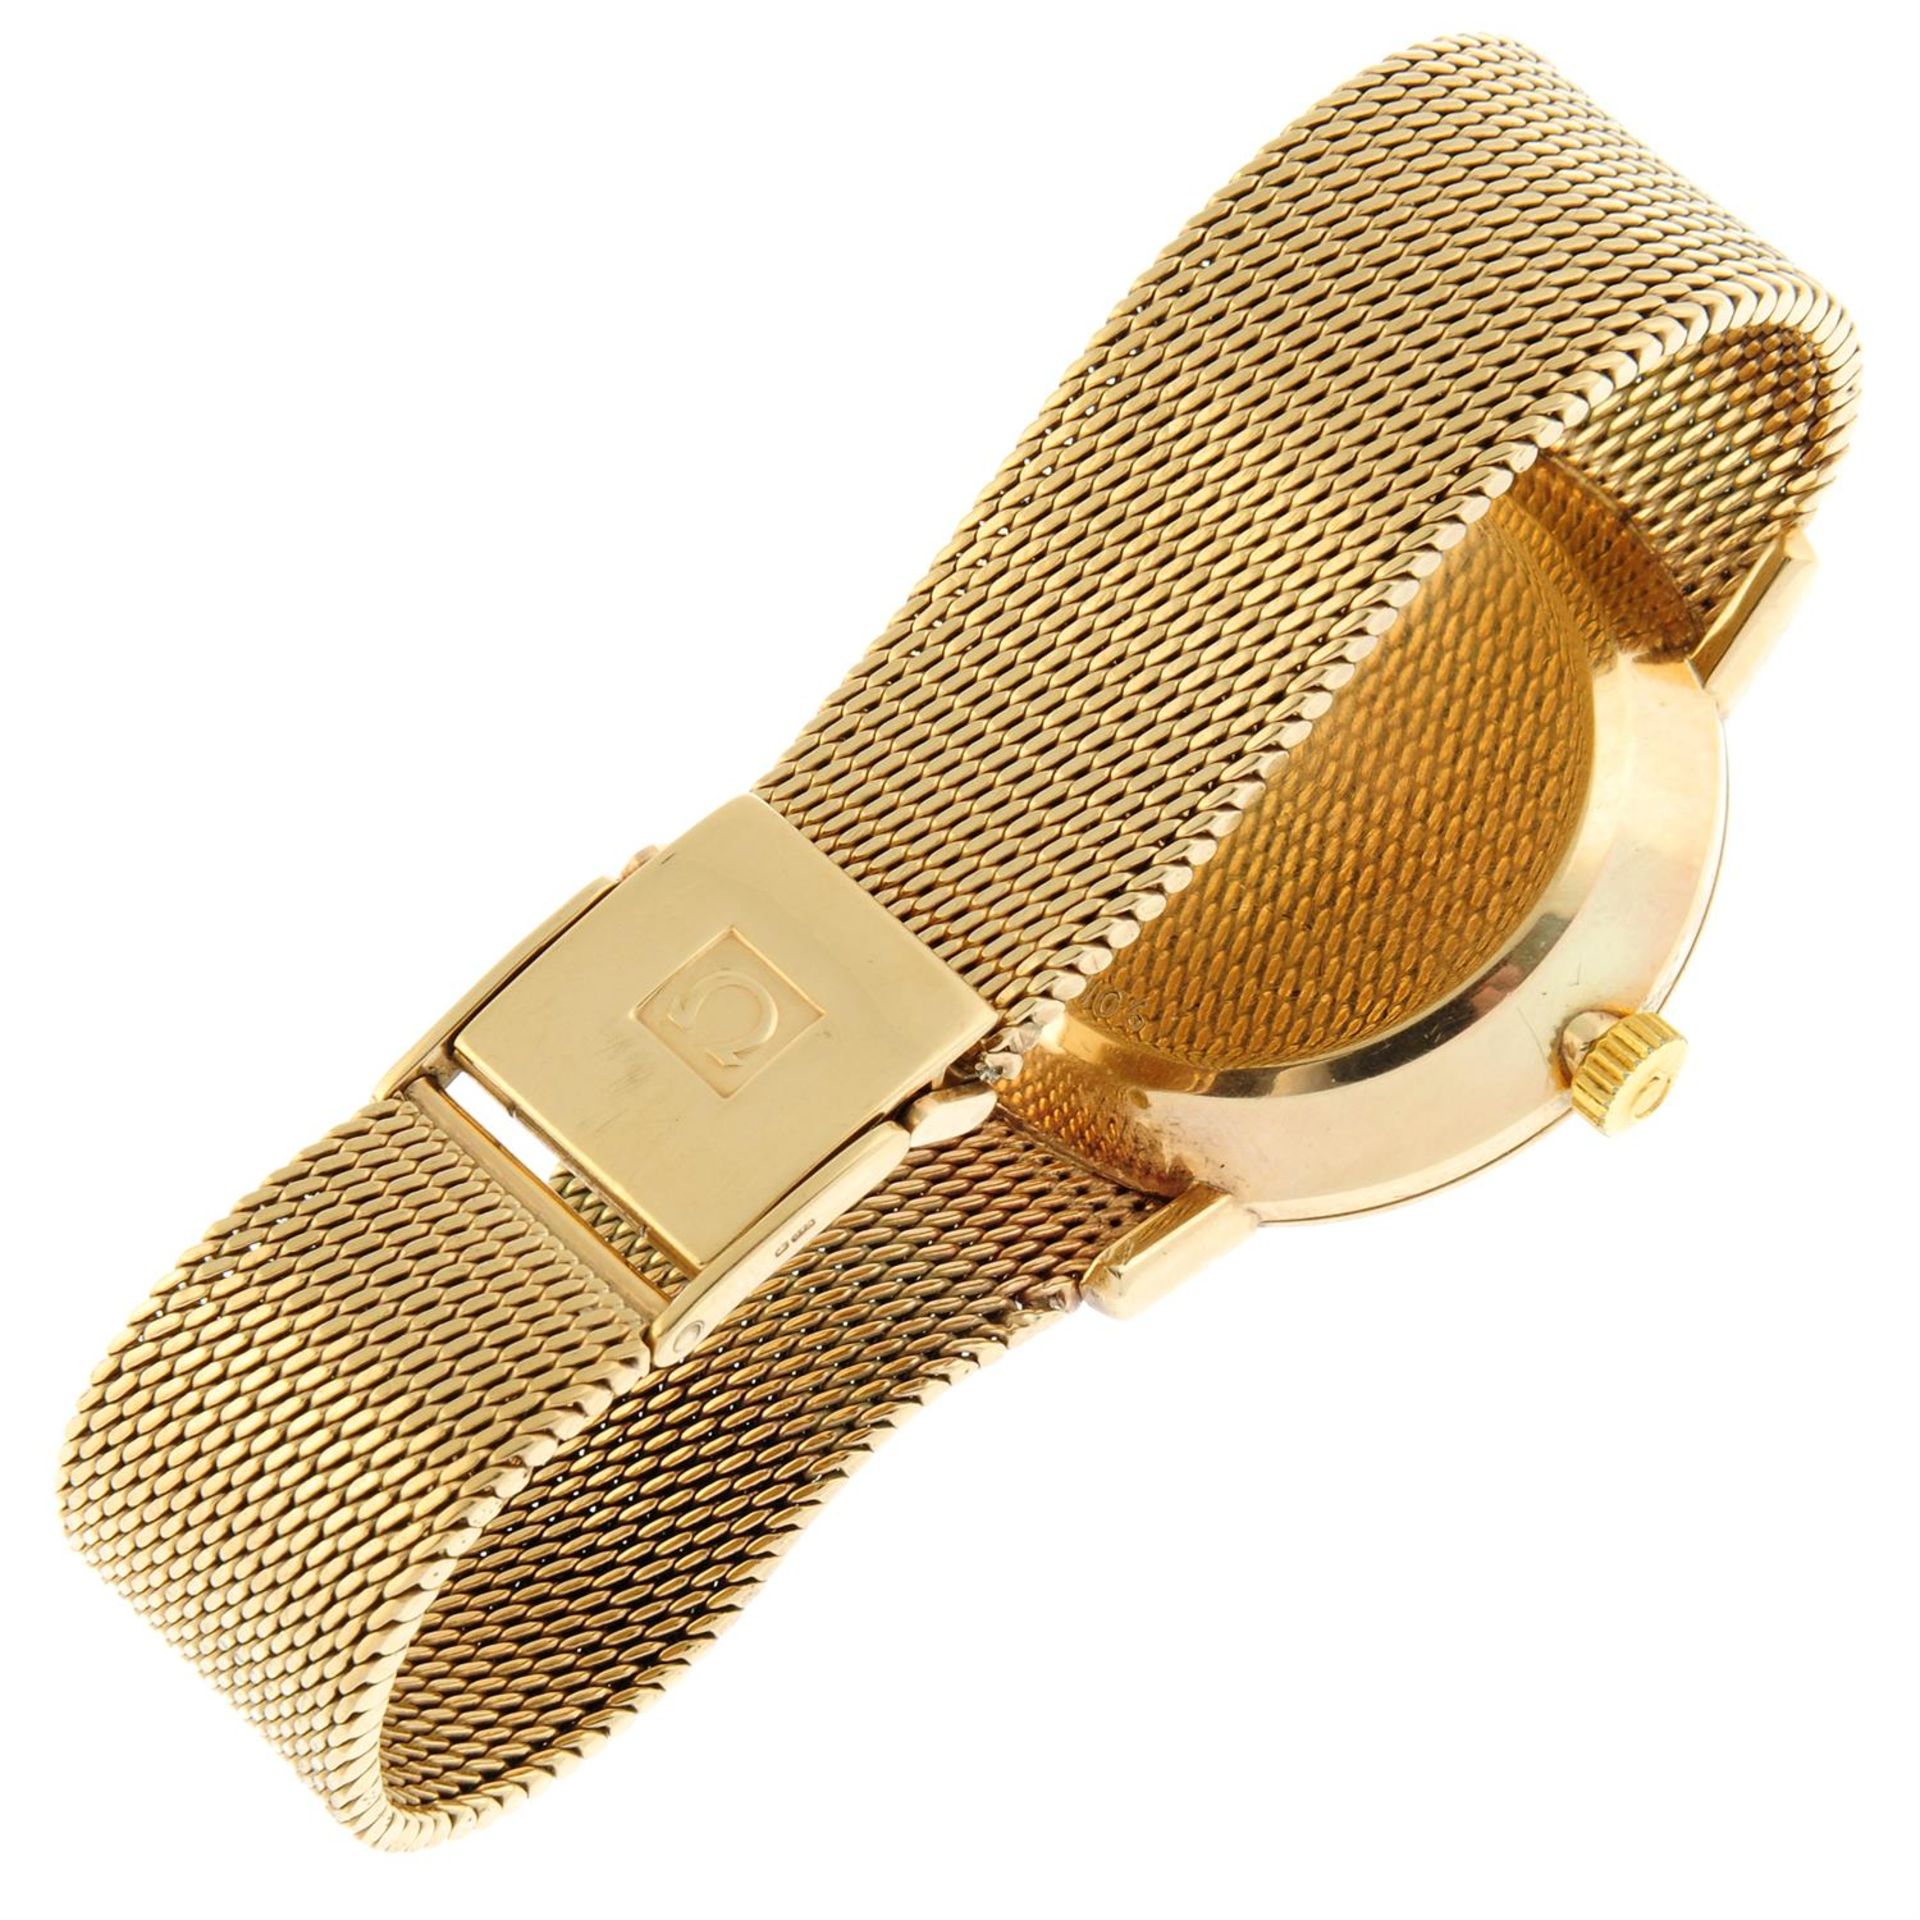 Omega - a bracelet watch, 34mm. - Image 2 of 6